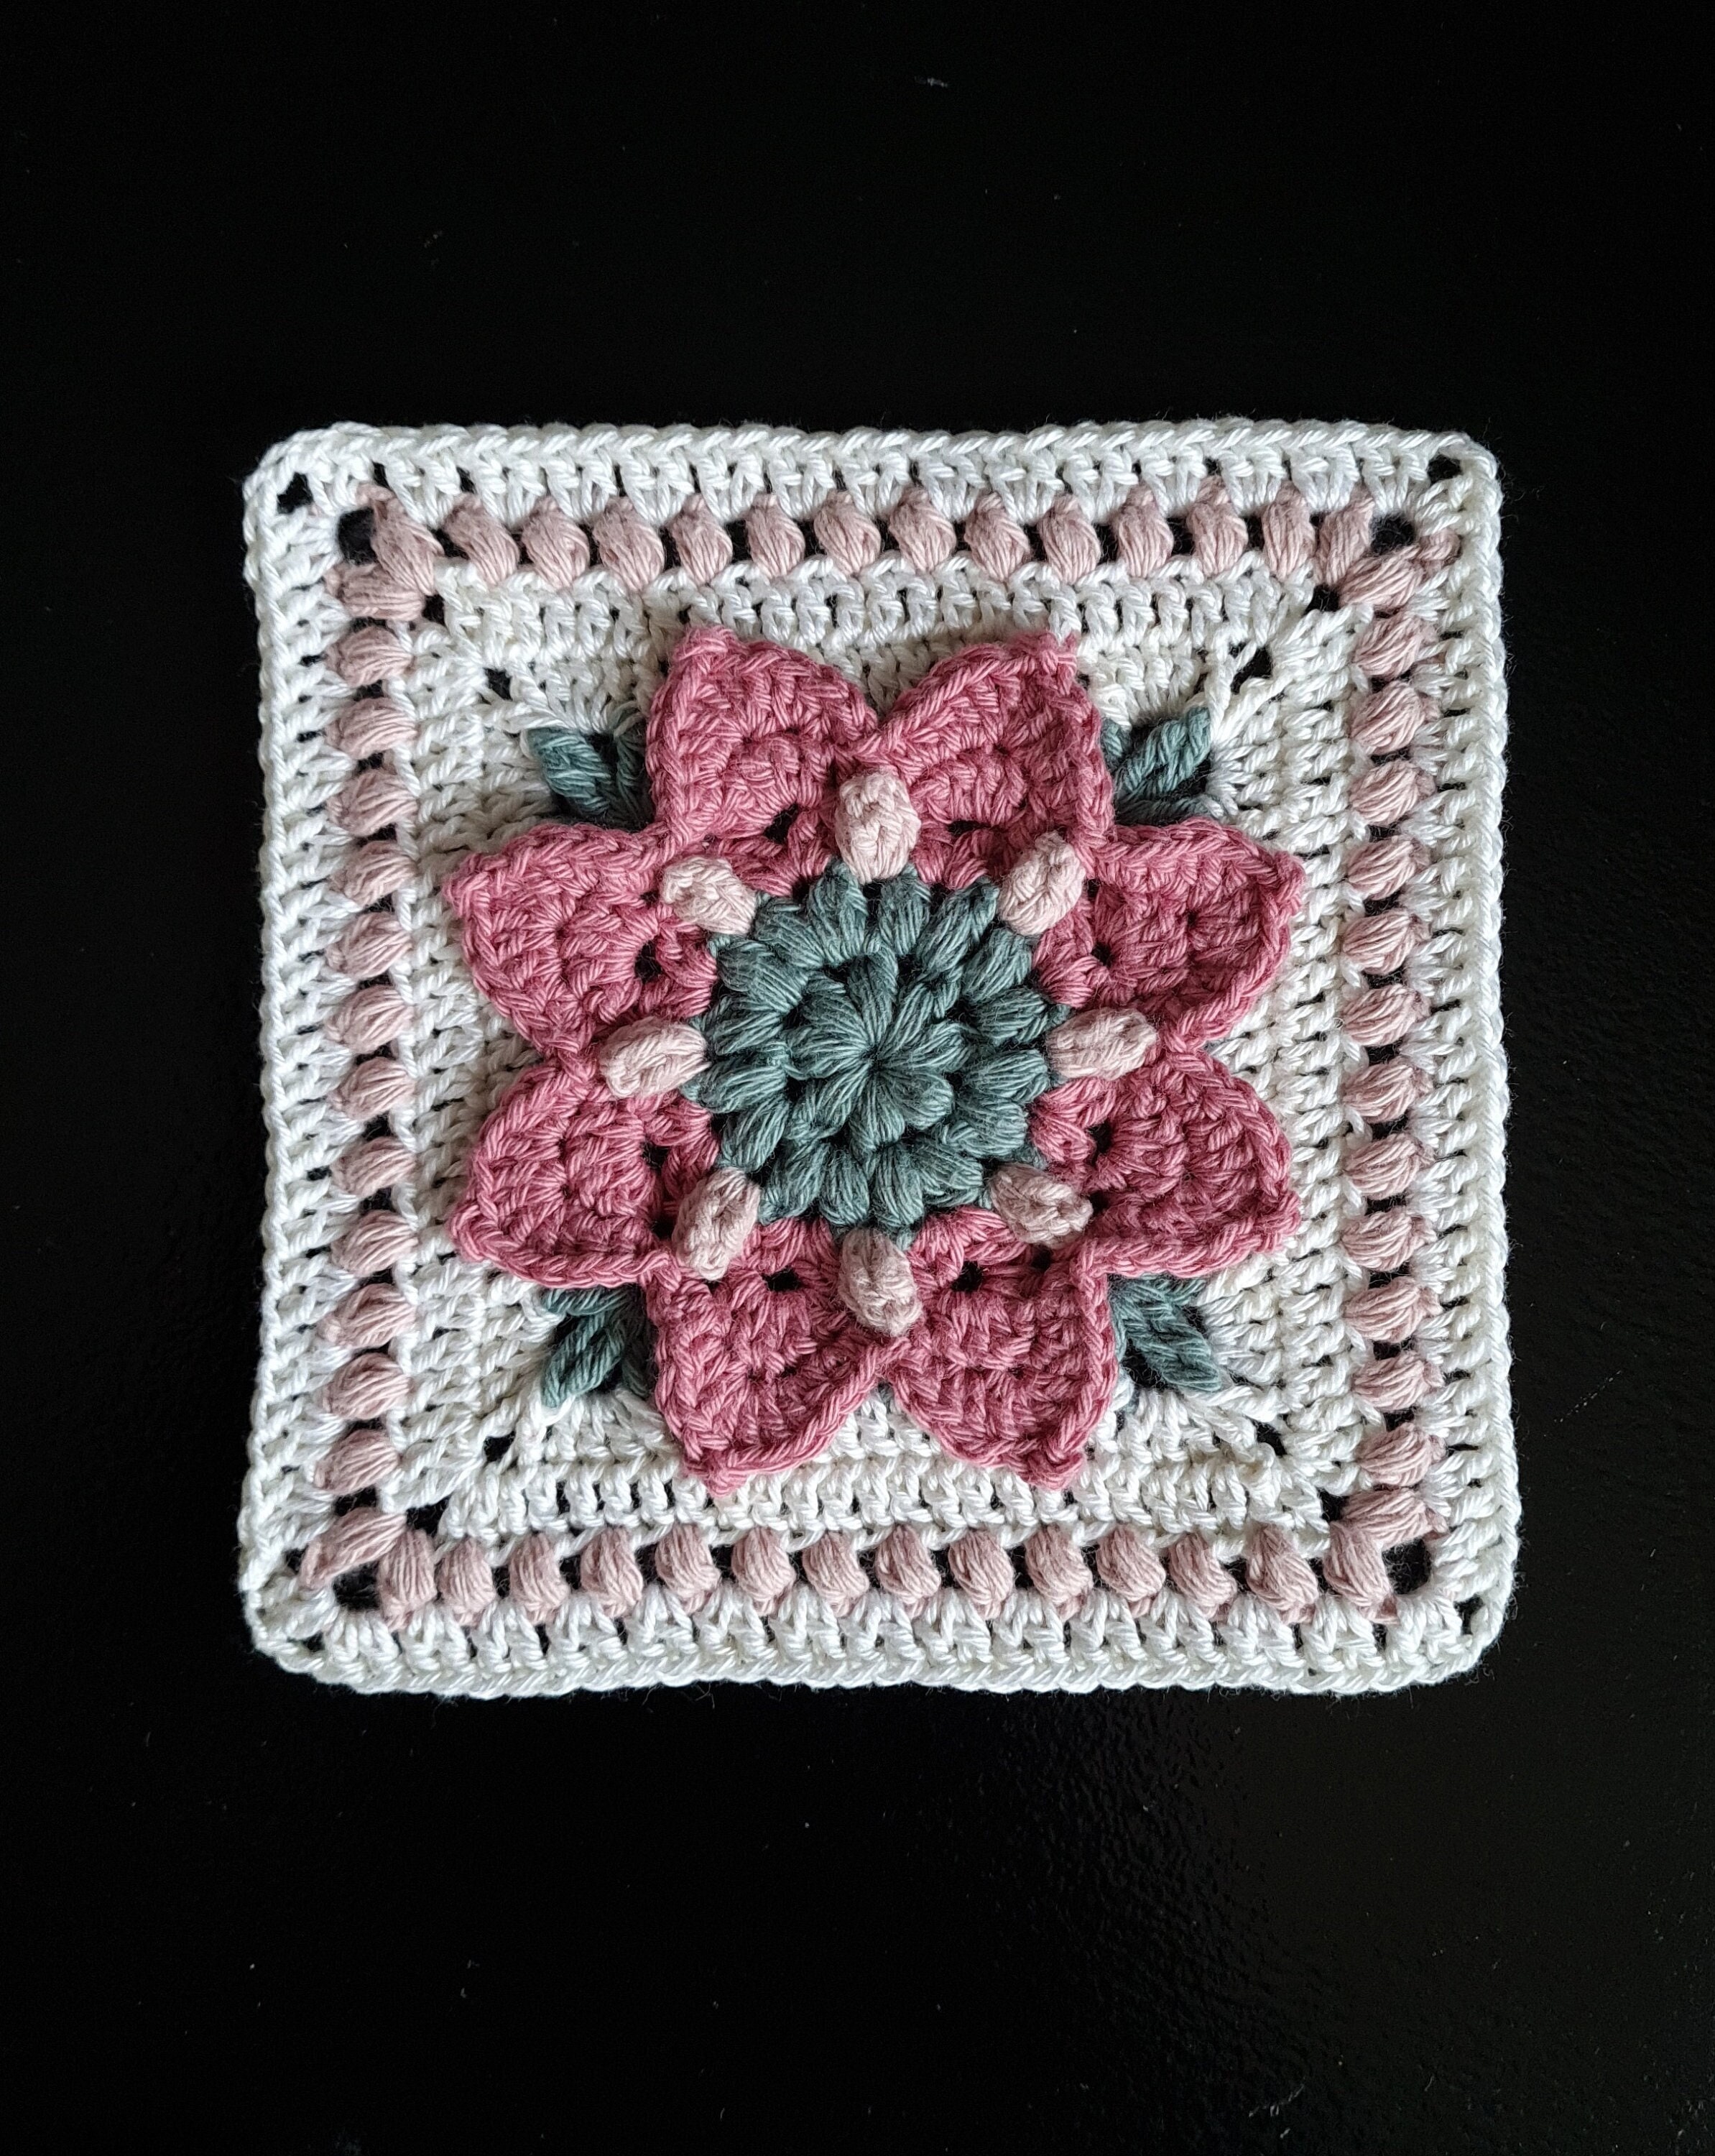 Retro flower granny square: Crochet pattern